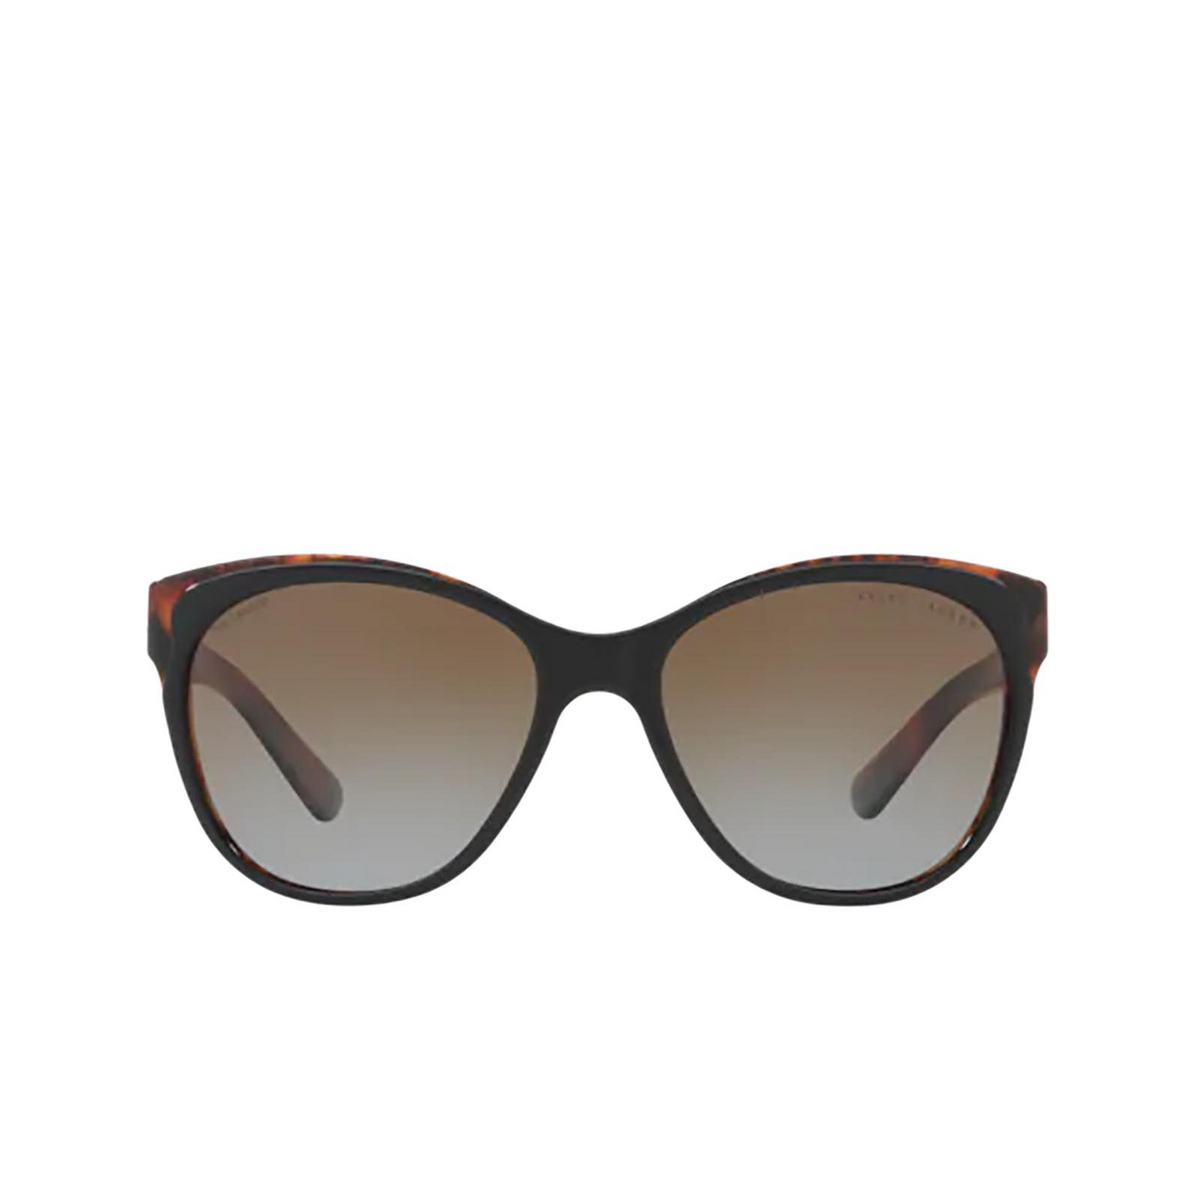 Ralph Lauren® Cat-eye Sunglasses: RL8156 color Shiny Black On Jerry Havana 5260T5 - front view.